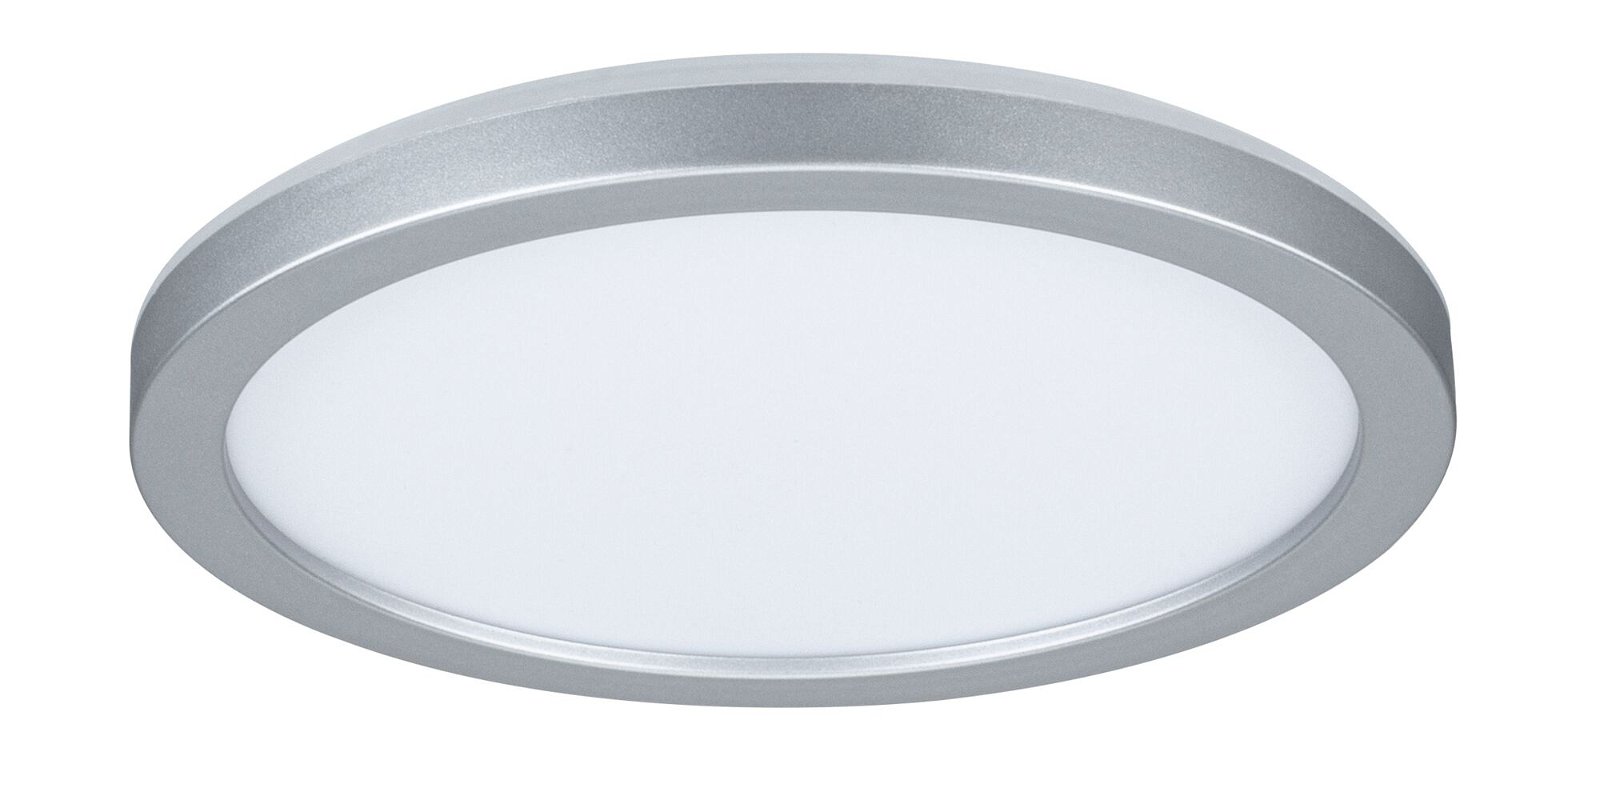 LED Panel Atria Shine Backlight round 190mm 11,2W 850lm 4000K Chrome matt